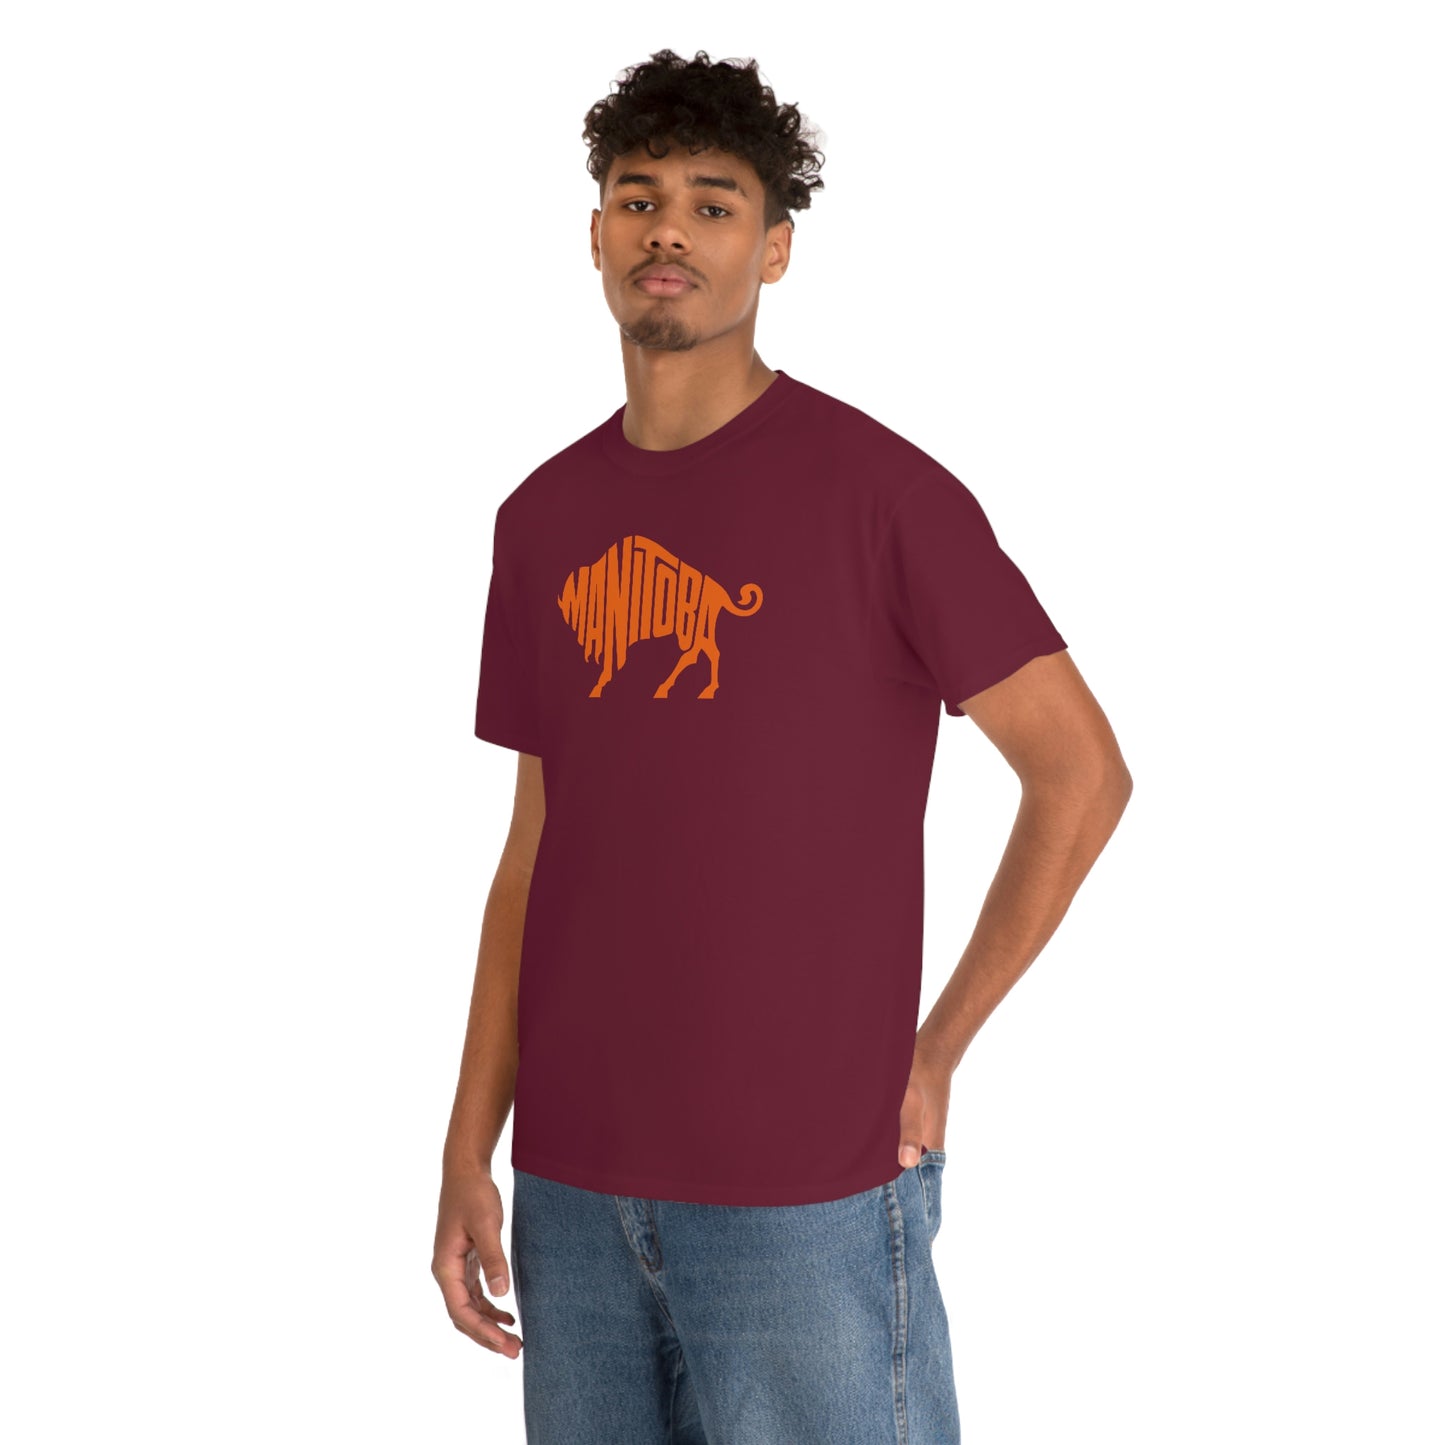 Manitoba T-Shirt